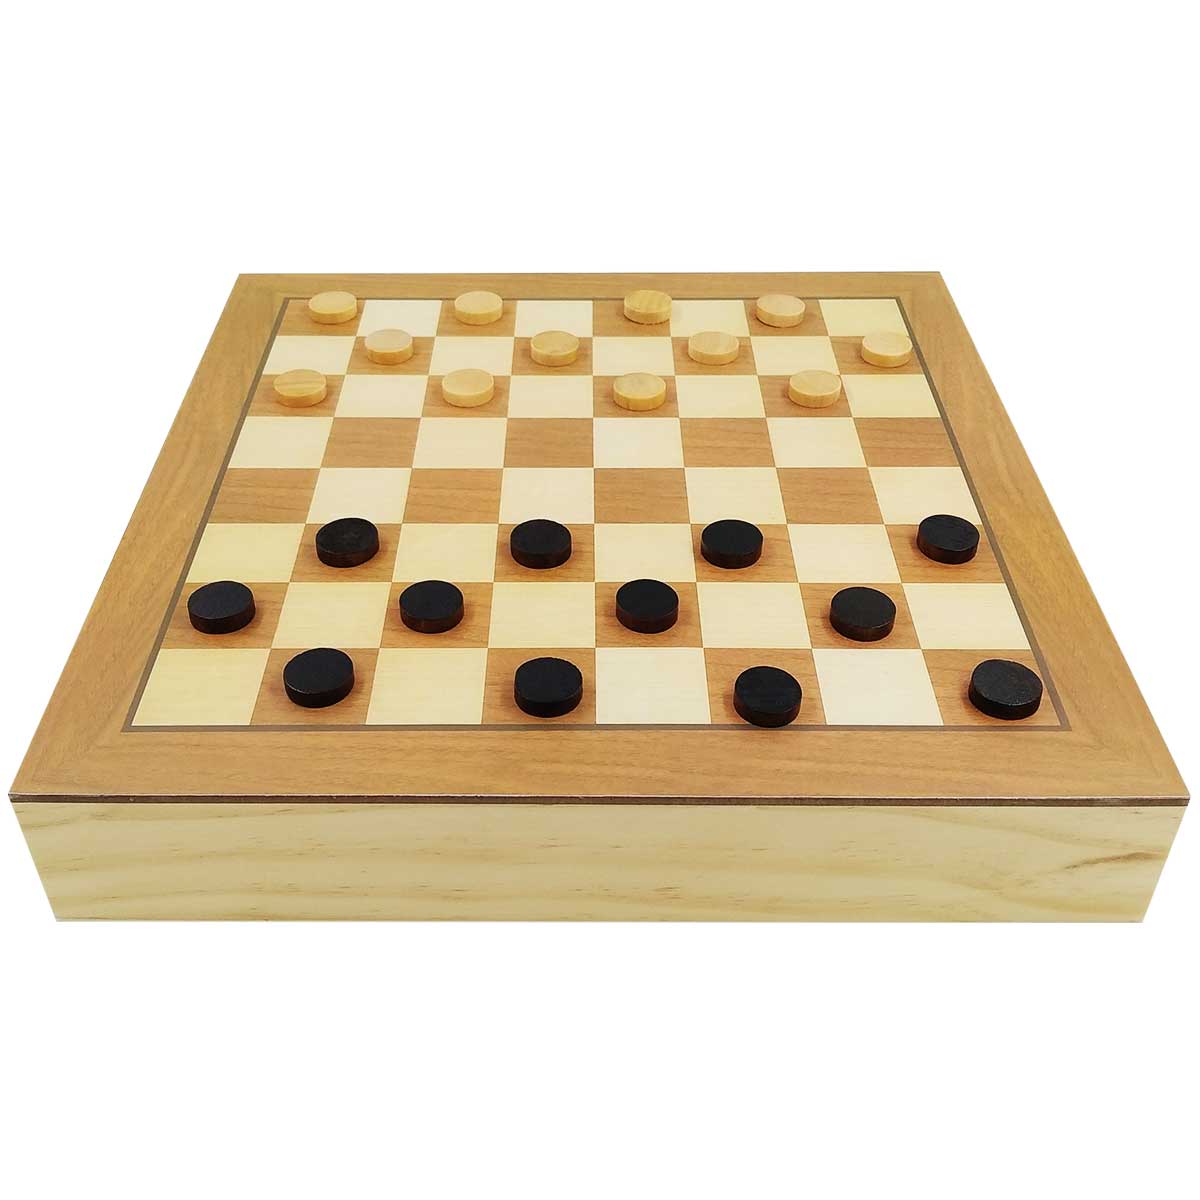 Jogo de Xadrez Completo - Tabuleiro com Gavetas - Cód. 104